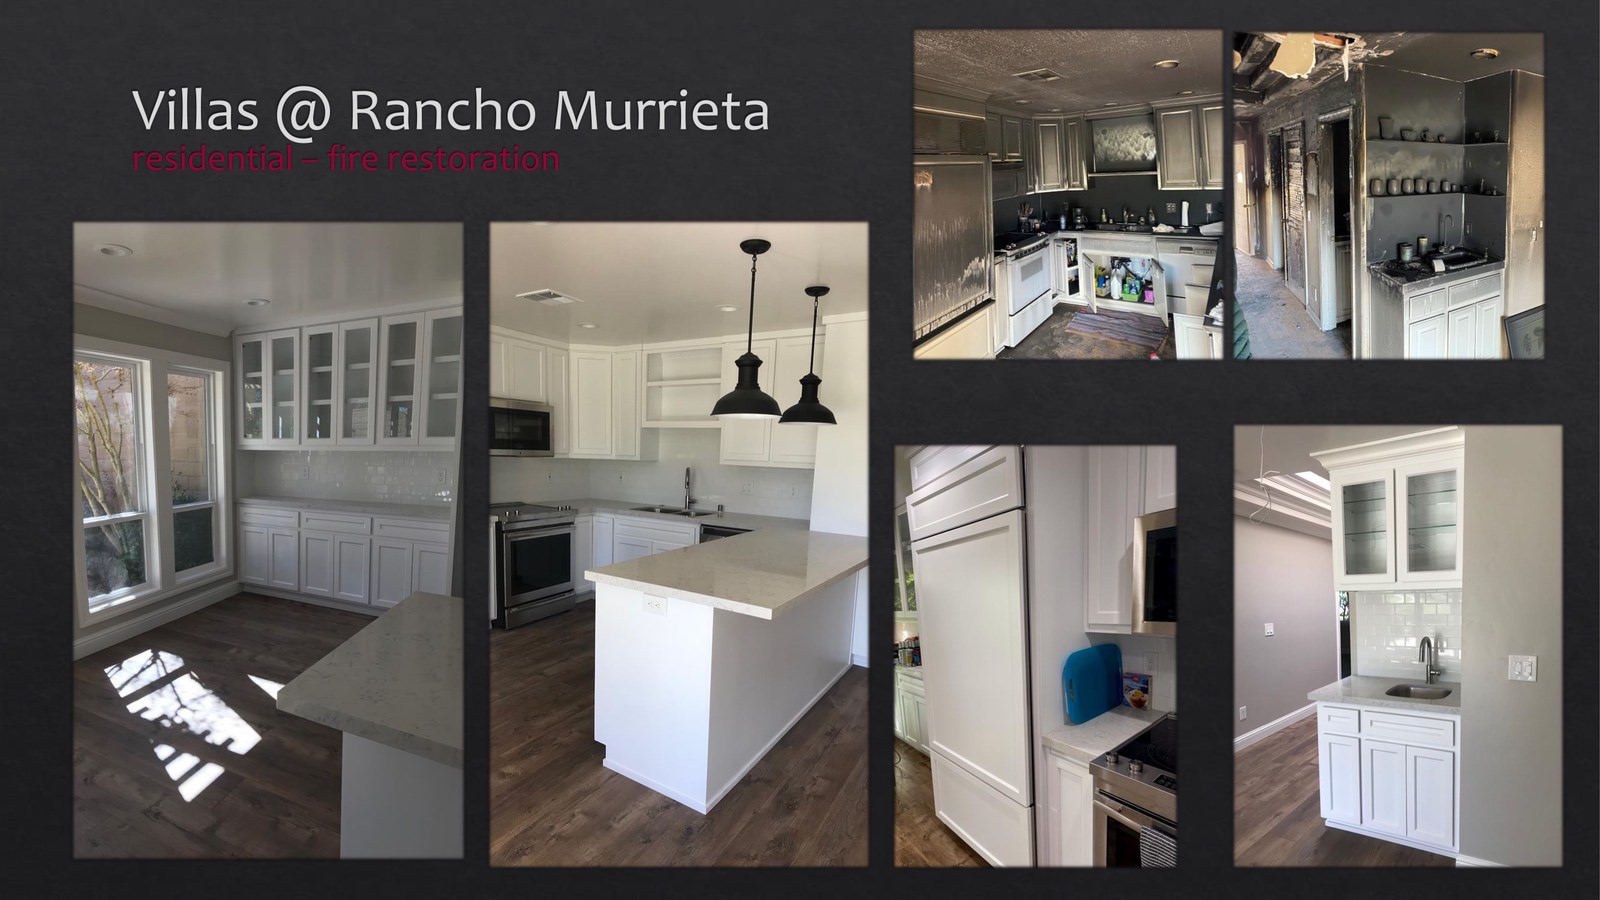 Rancho Murrieta Villas Residential fire restoration - kitchen